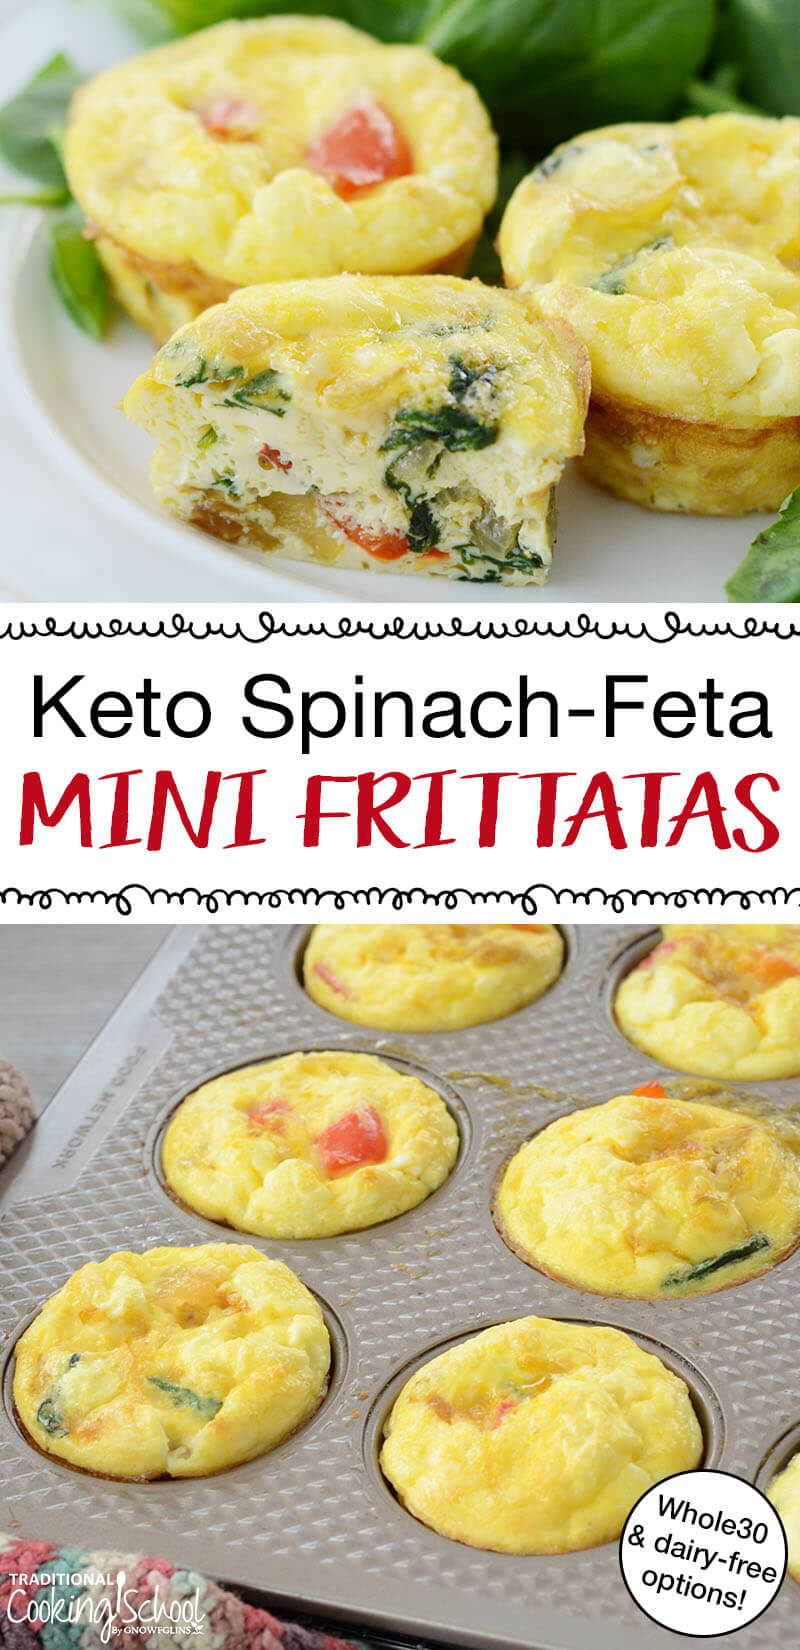 Spinach-Feta Keto Mini Frittatas (Paleo, Whole30 & dairy-free options!)